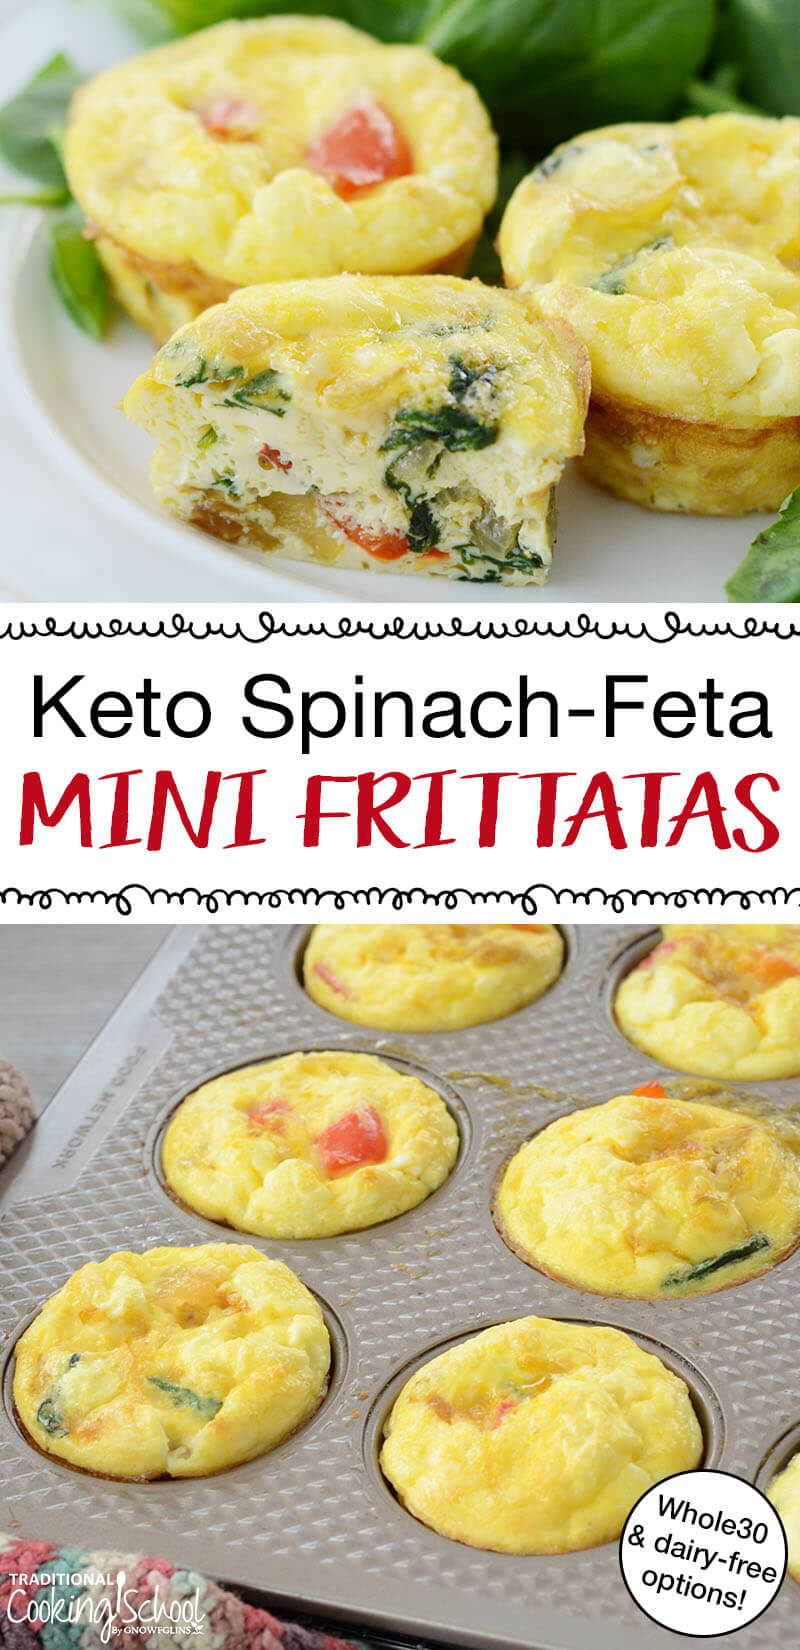 Spinach-Feta Keto Mini Frittatas (Paleo, Whole30 & dairy-free options!)